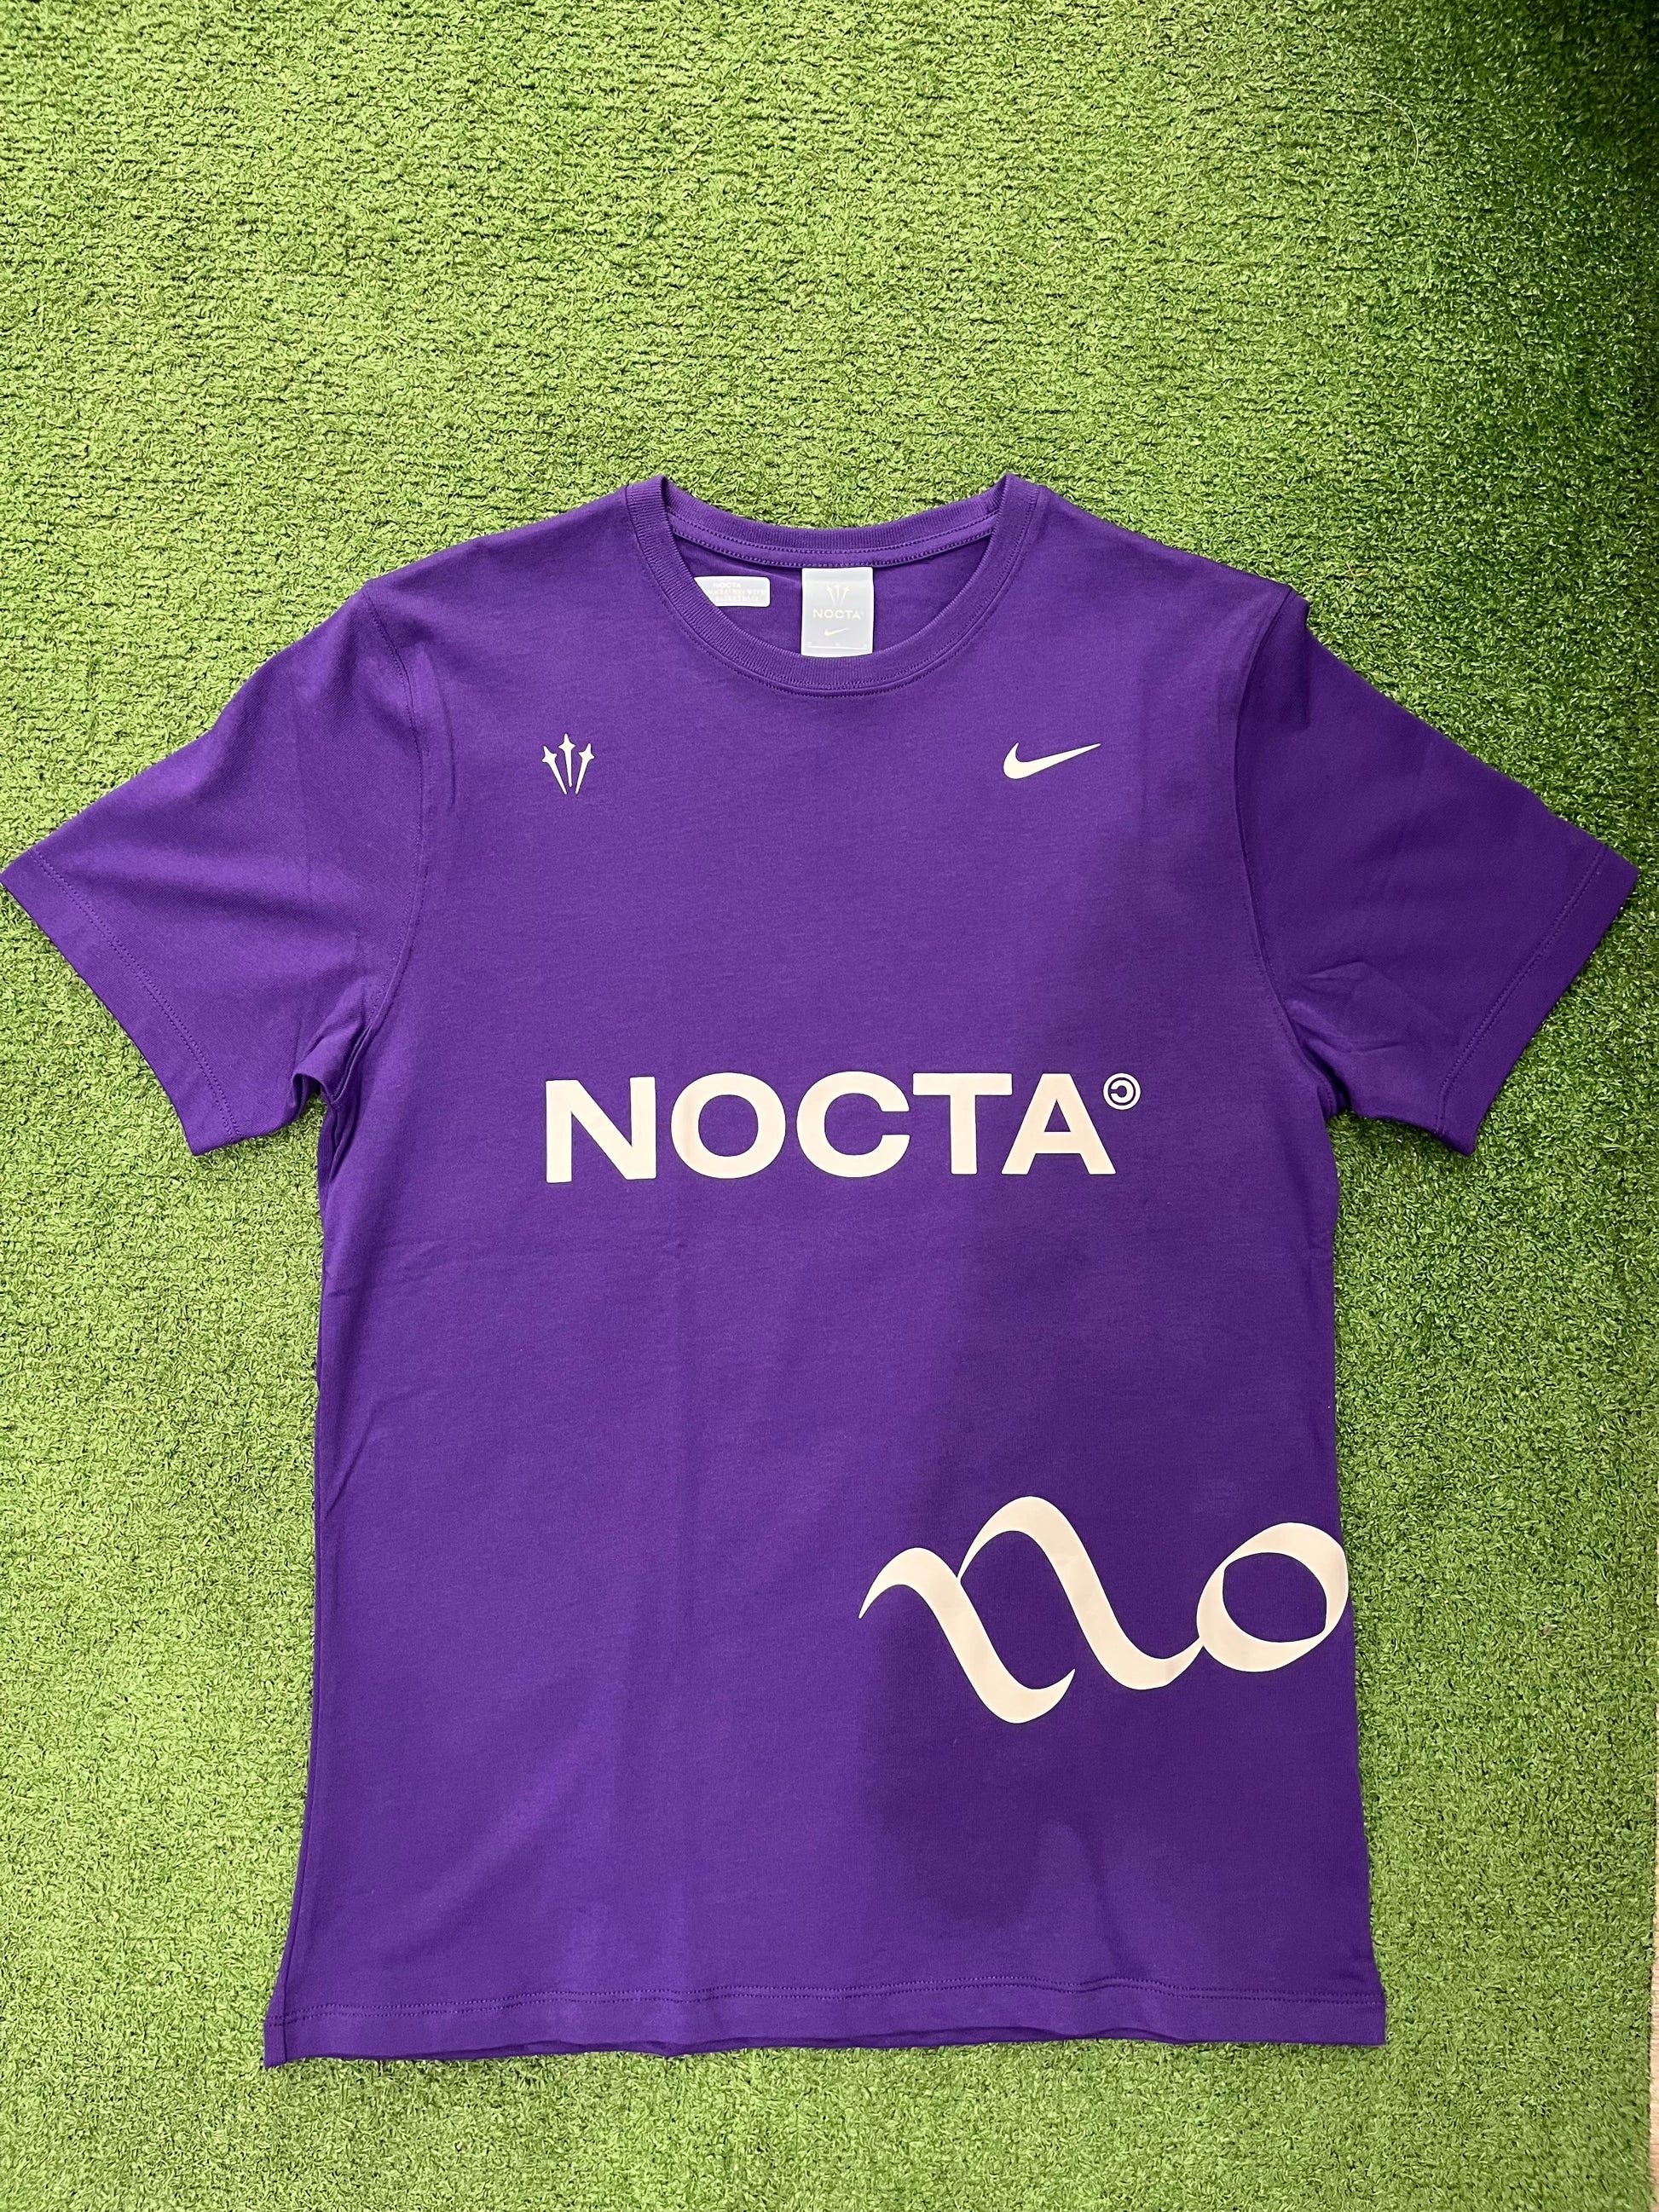 Nike x NOCTA SS Top Tee Purple, T-Shirt - Supra Sneakers